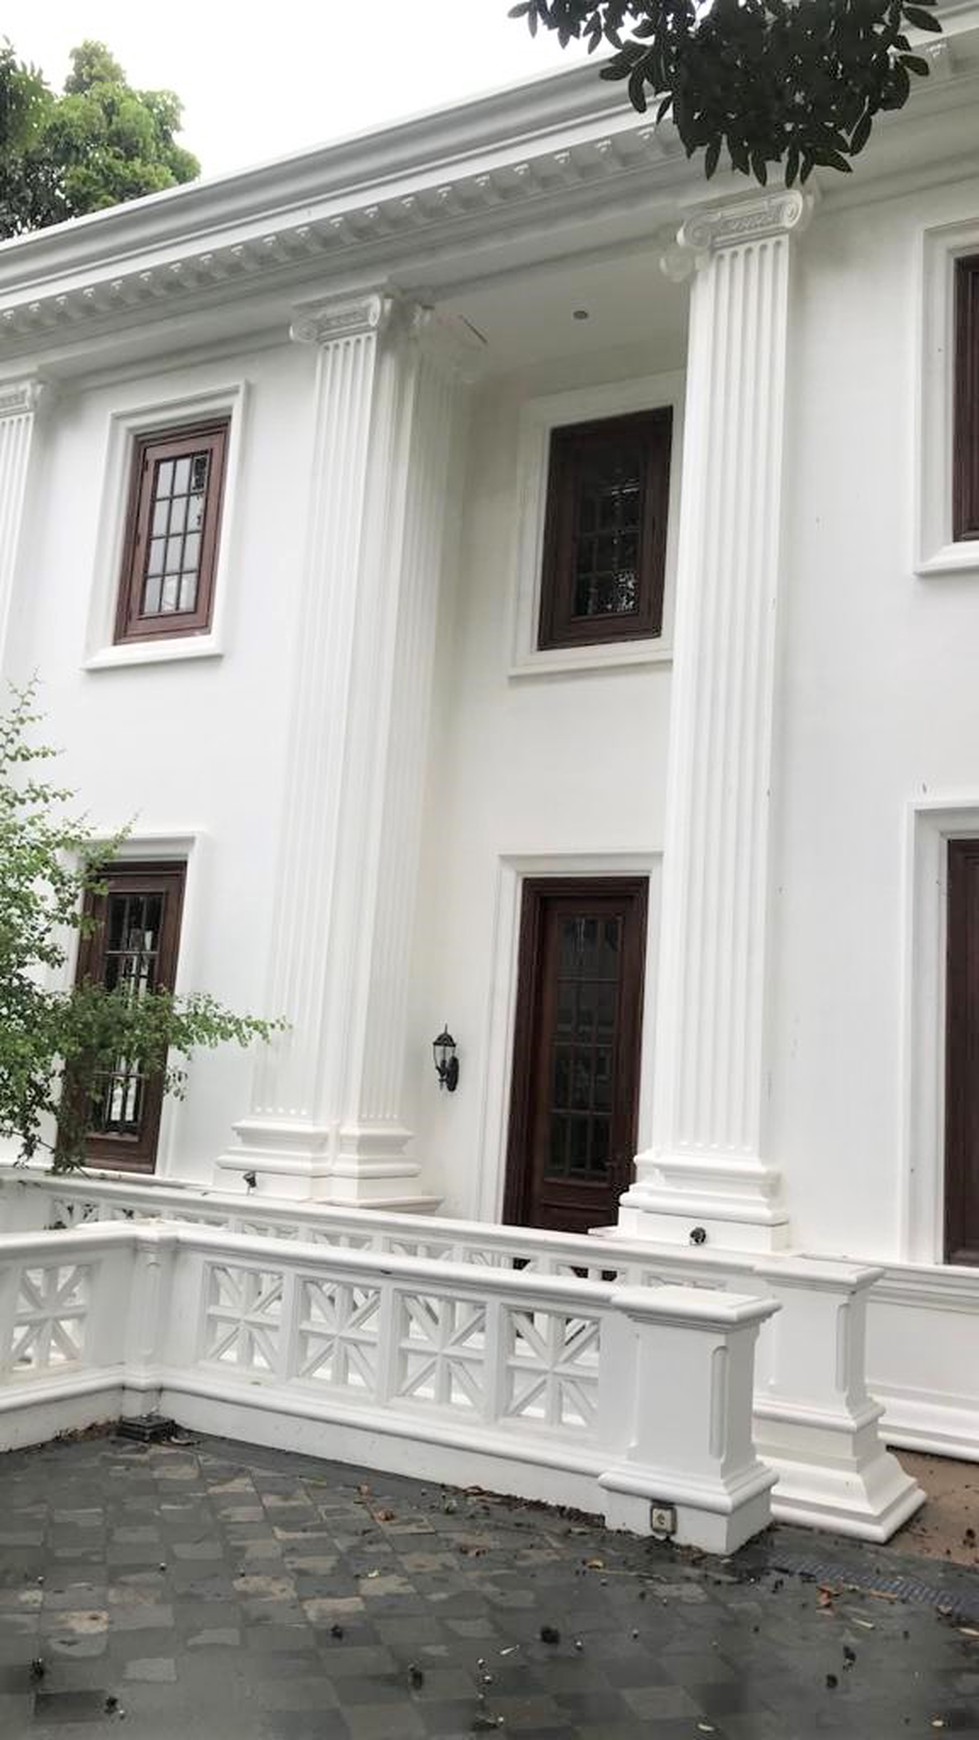 Dijual Rumah mewah Siap Huni Lokasi Di Jagakarsa Jakarta Selatan